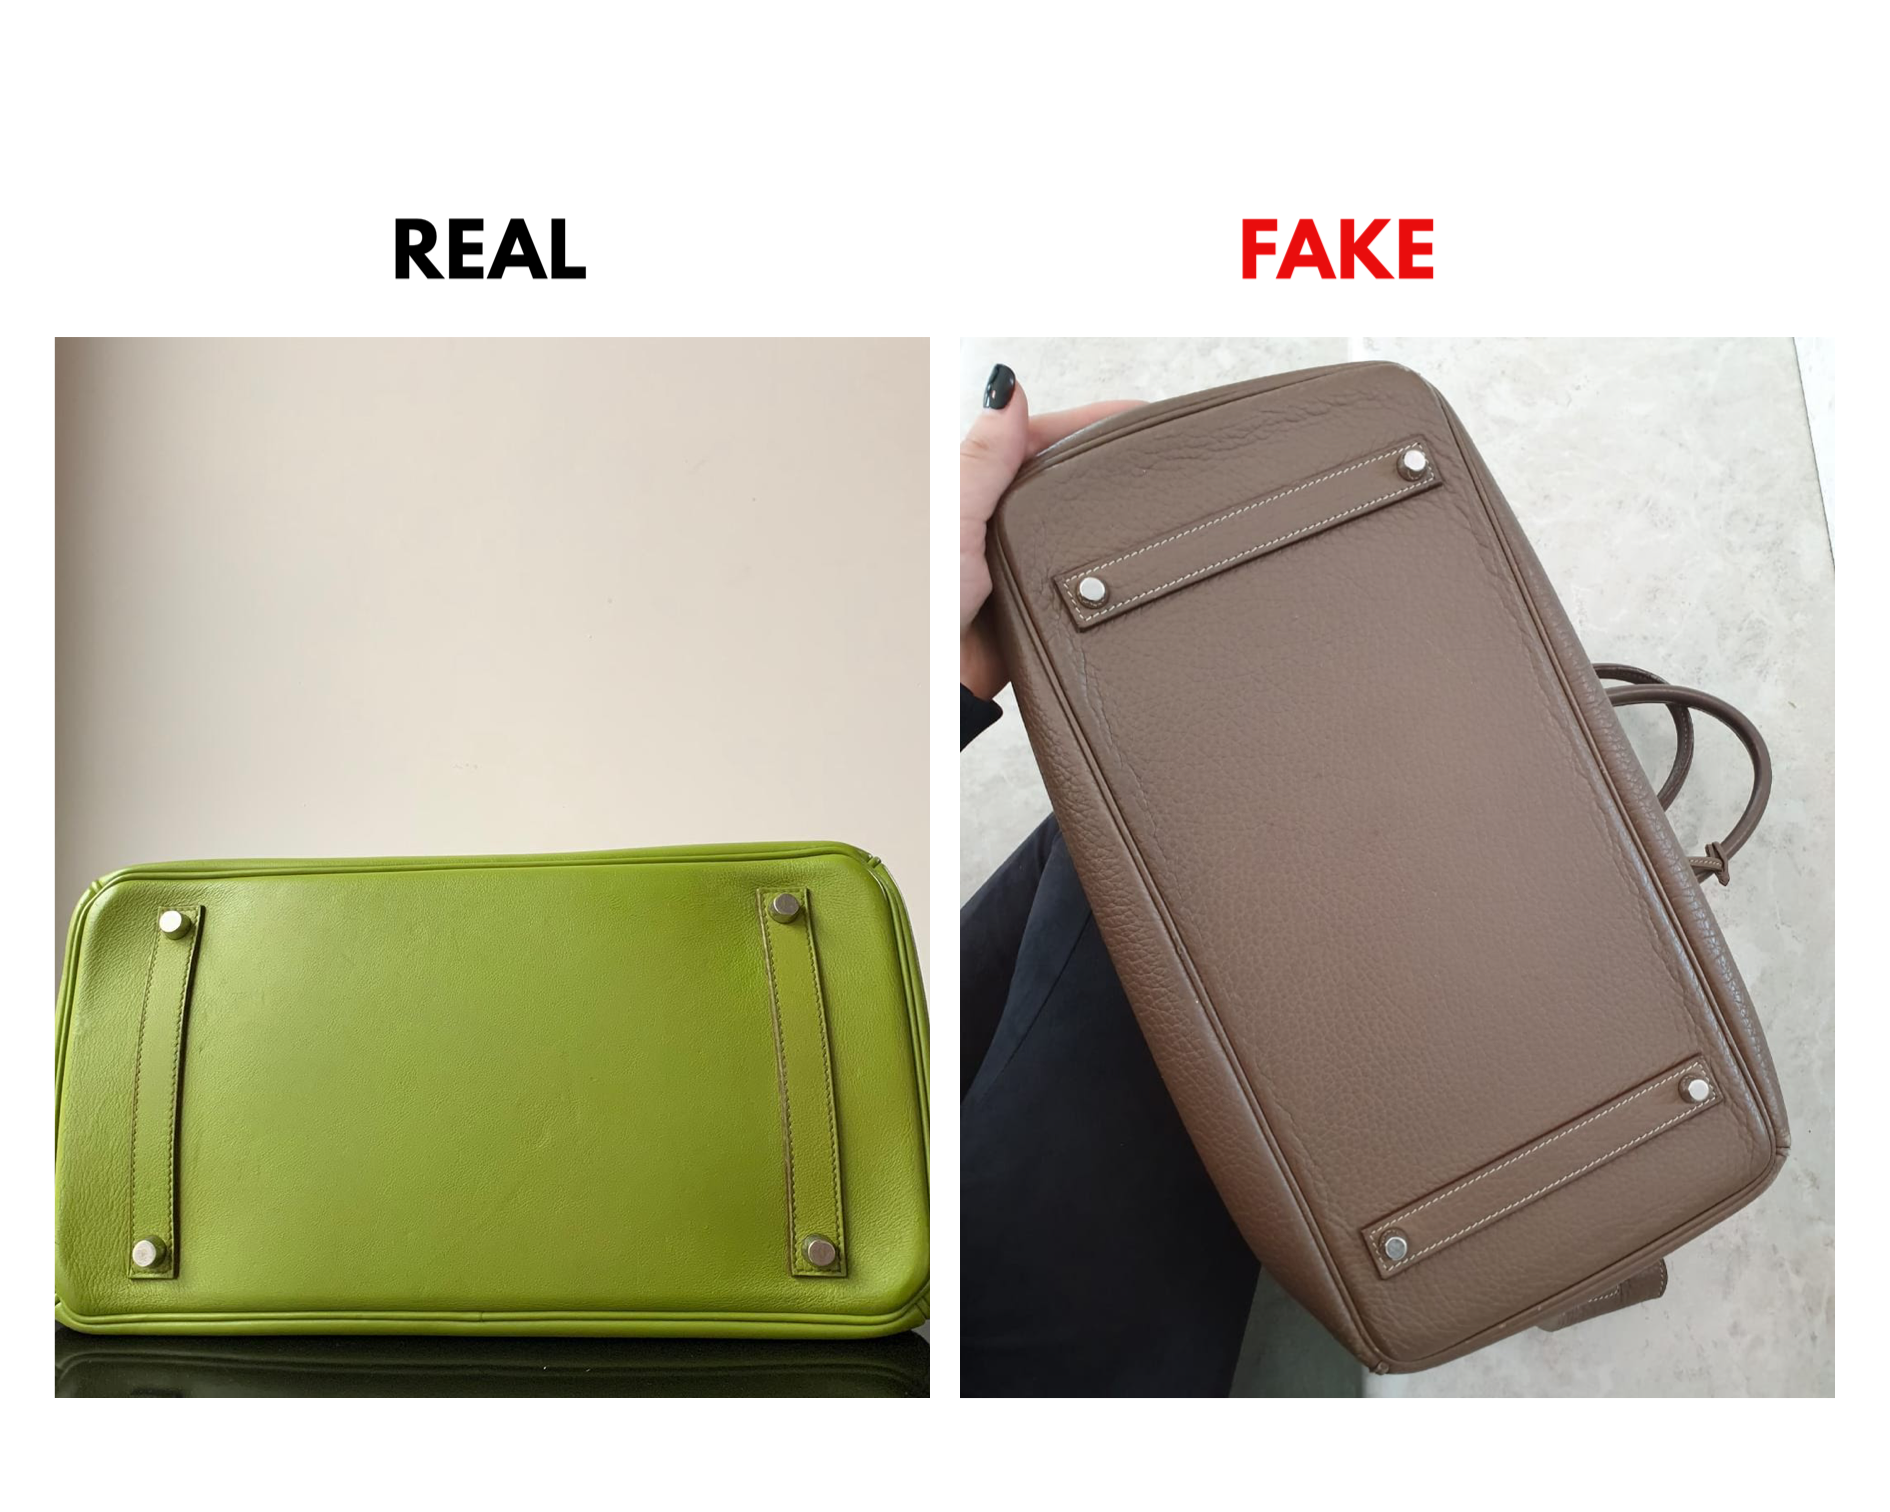 stamp hermes birkin bag real vs fake